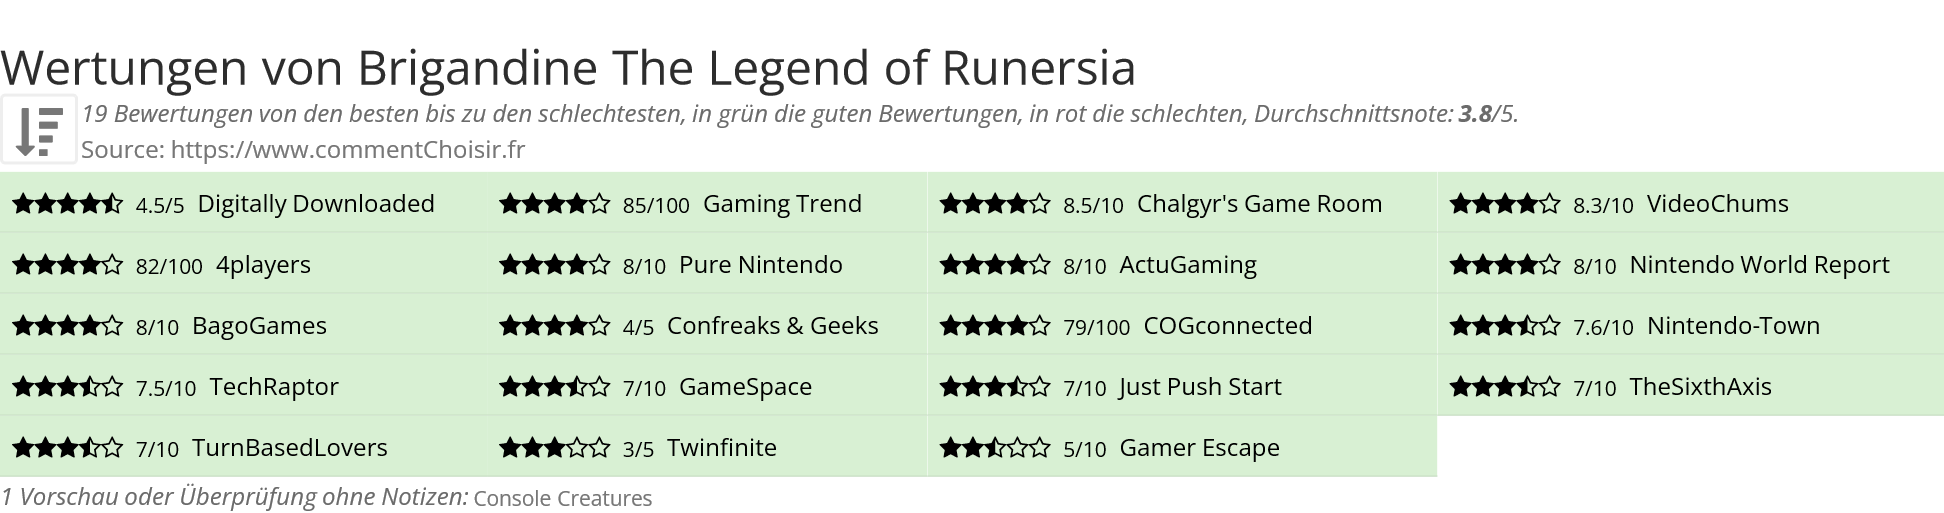 Ratings Brigandine The Legend of Runersia